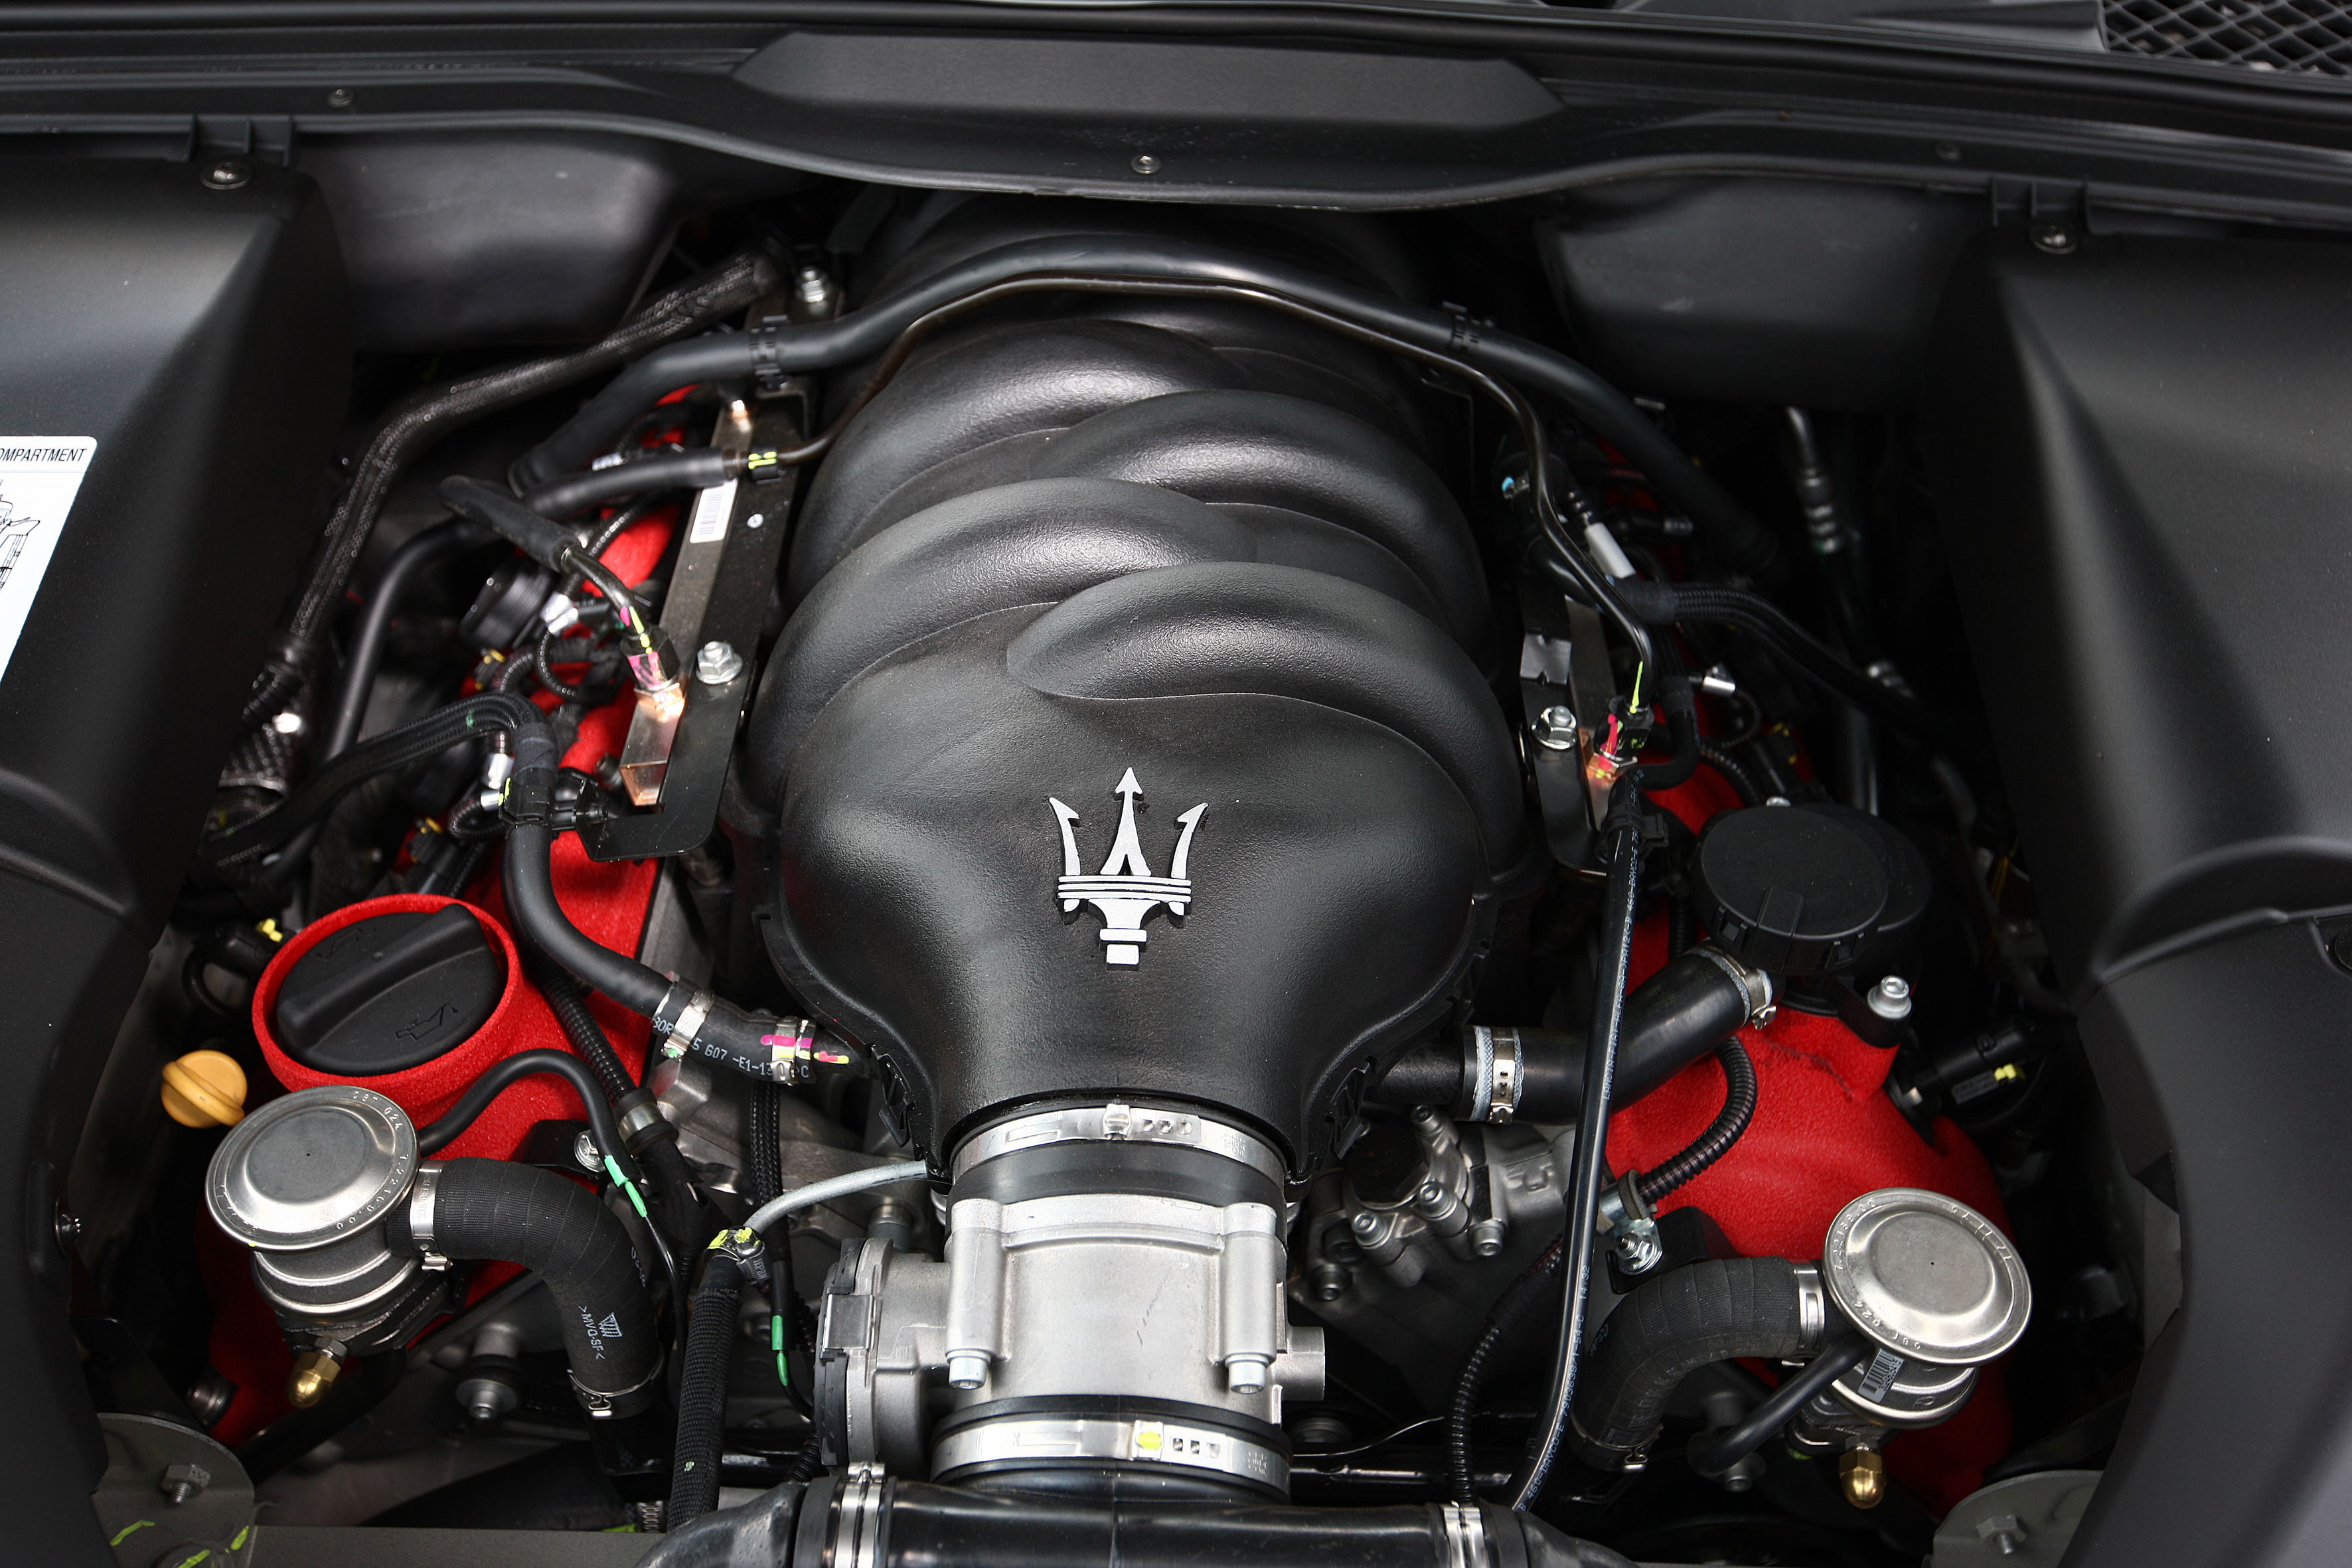 Двигатель мазерати. Maserati GRANTURISMO мотор. Мазерати Кватропорте двигатель. Мазерати 2010 мотор. Maserati v8.